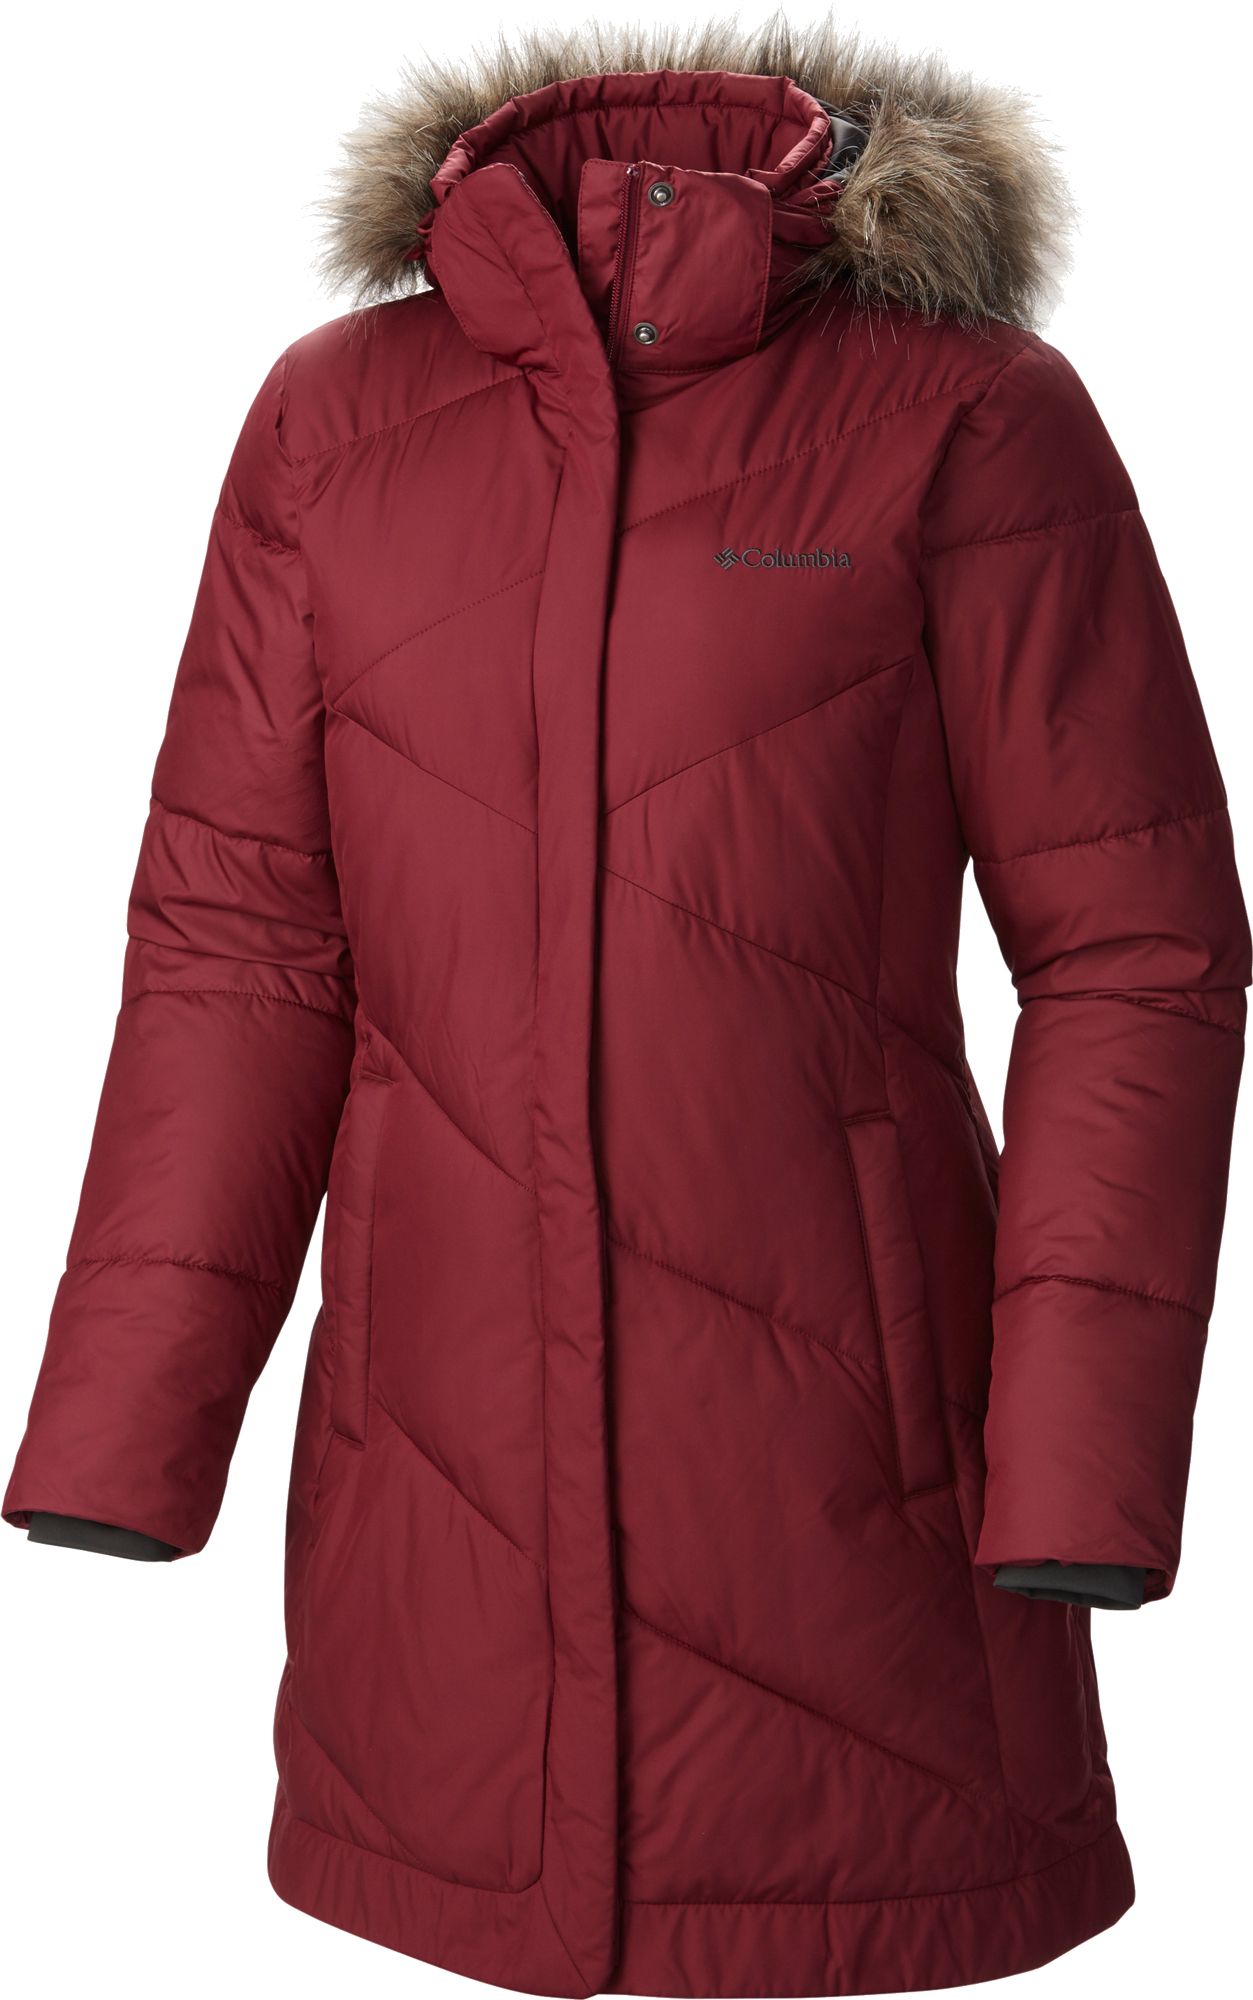 Women&39s Winter Coats &amp Jackets | DICK&39S Sporting Goods